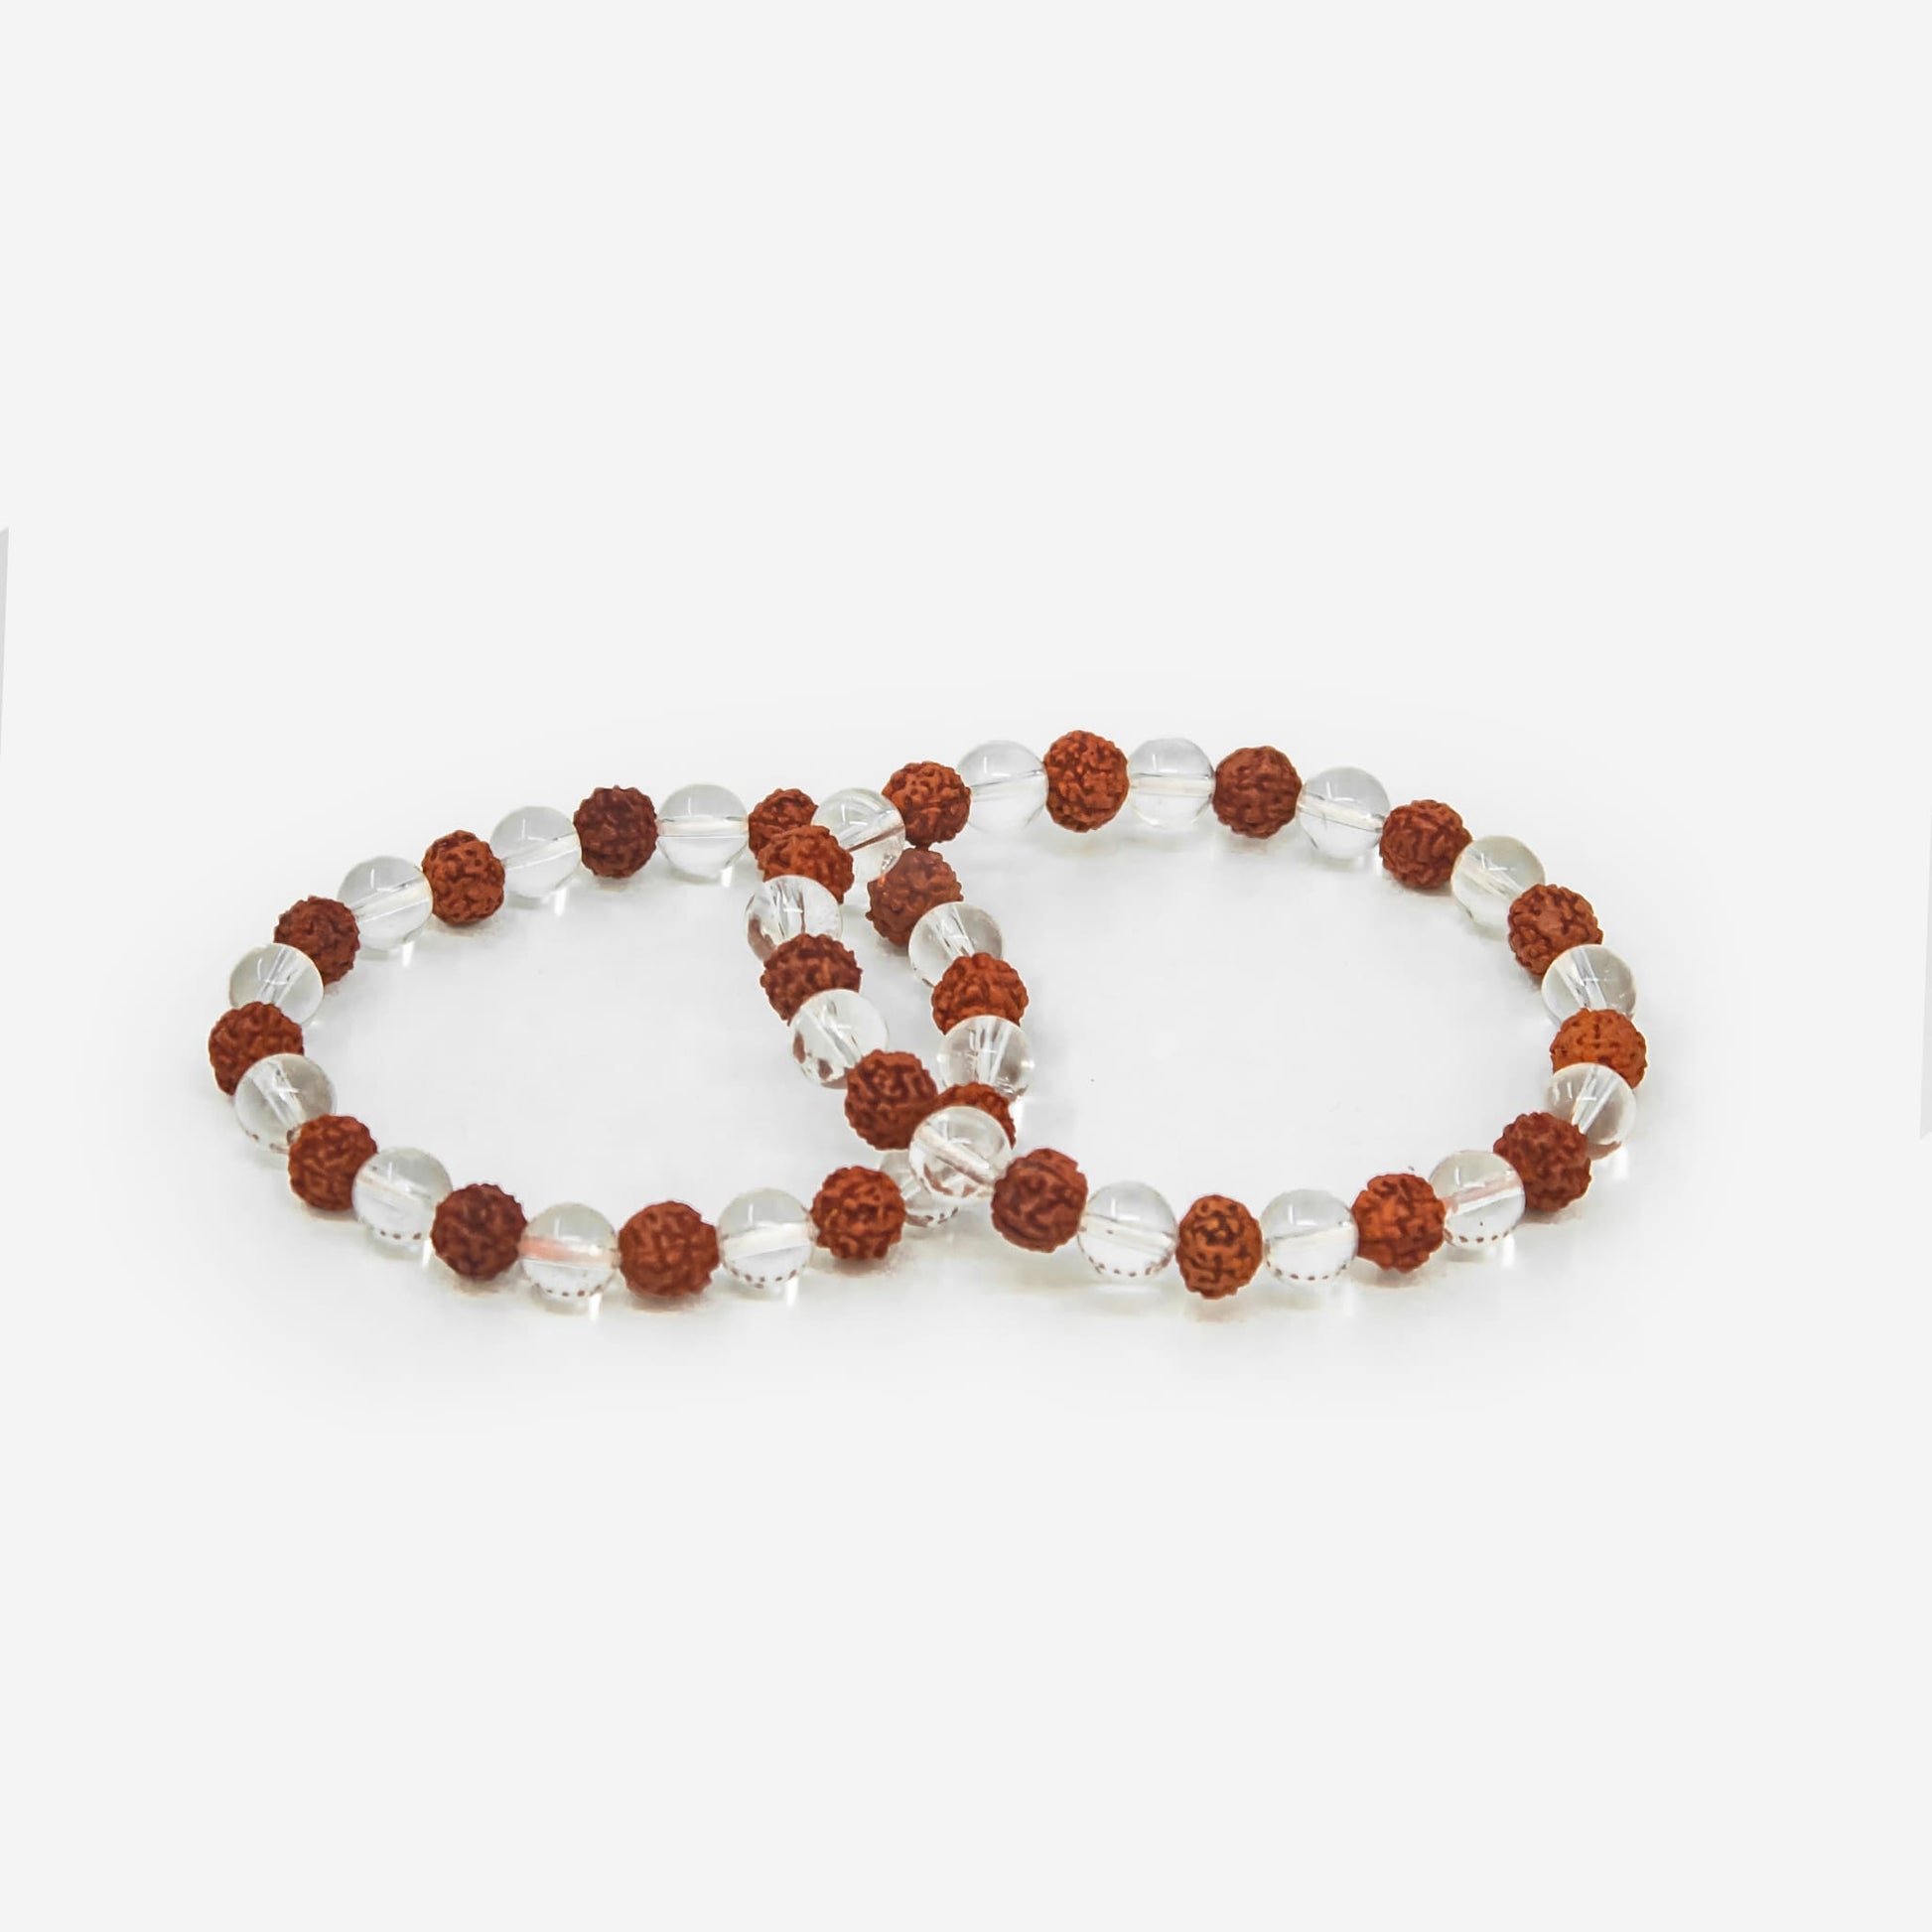 8 mm clear quartz and rudraksha bracelet